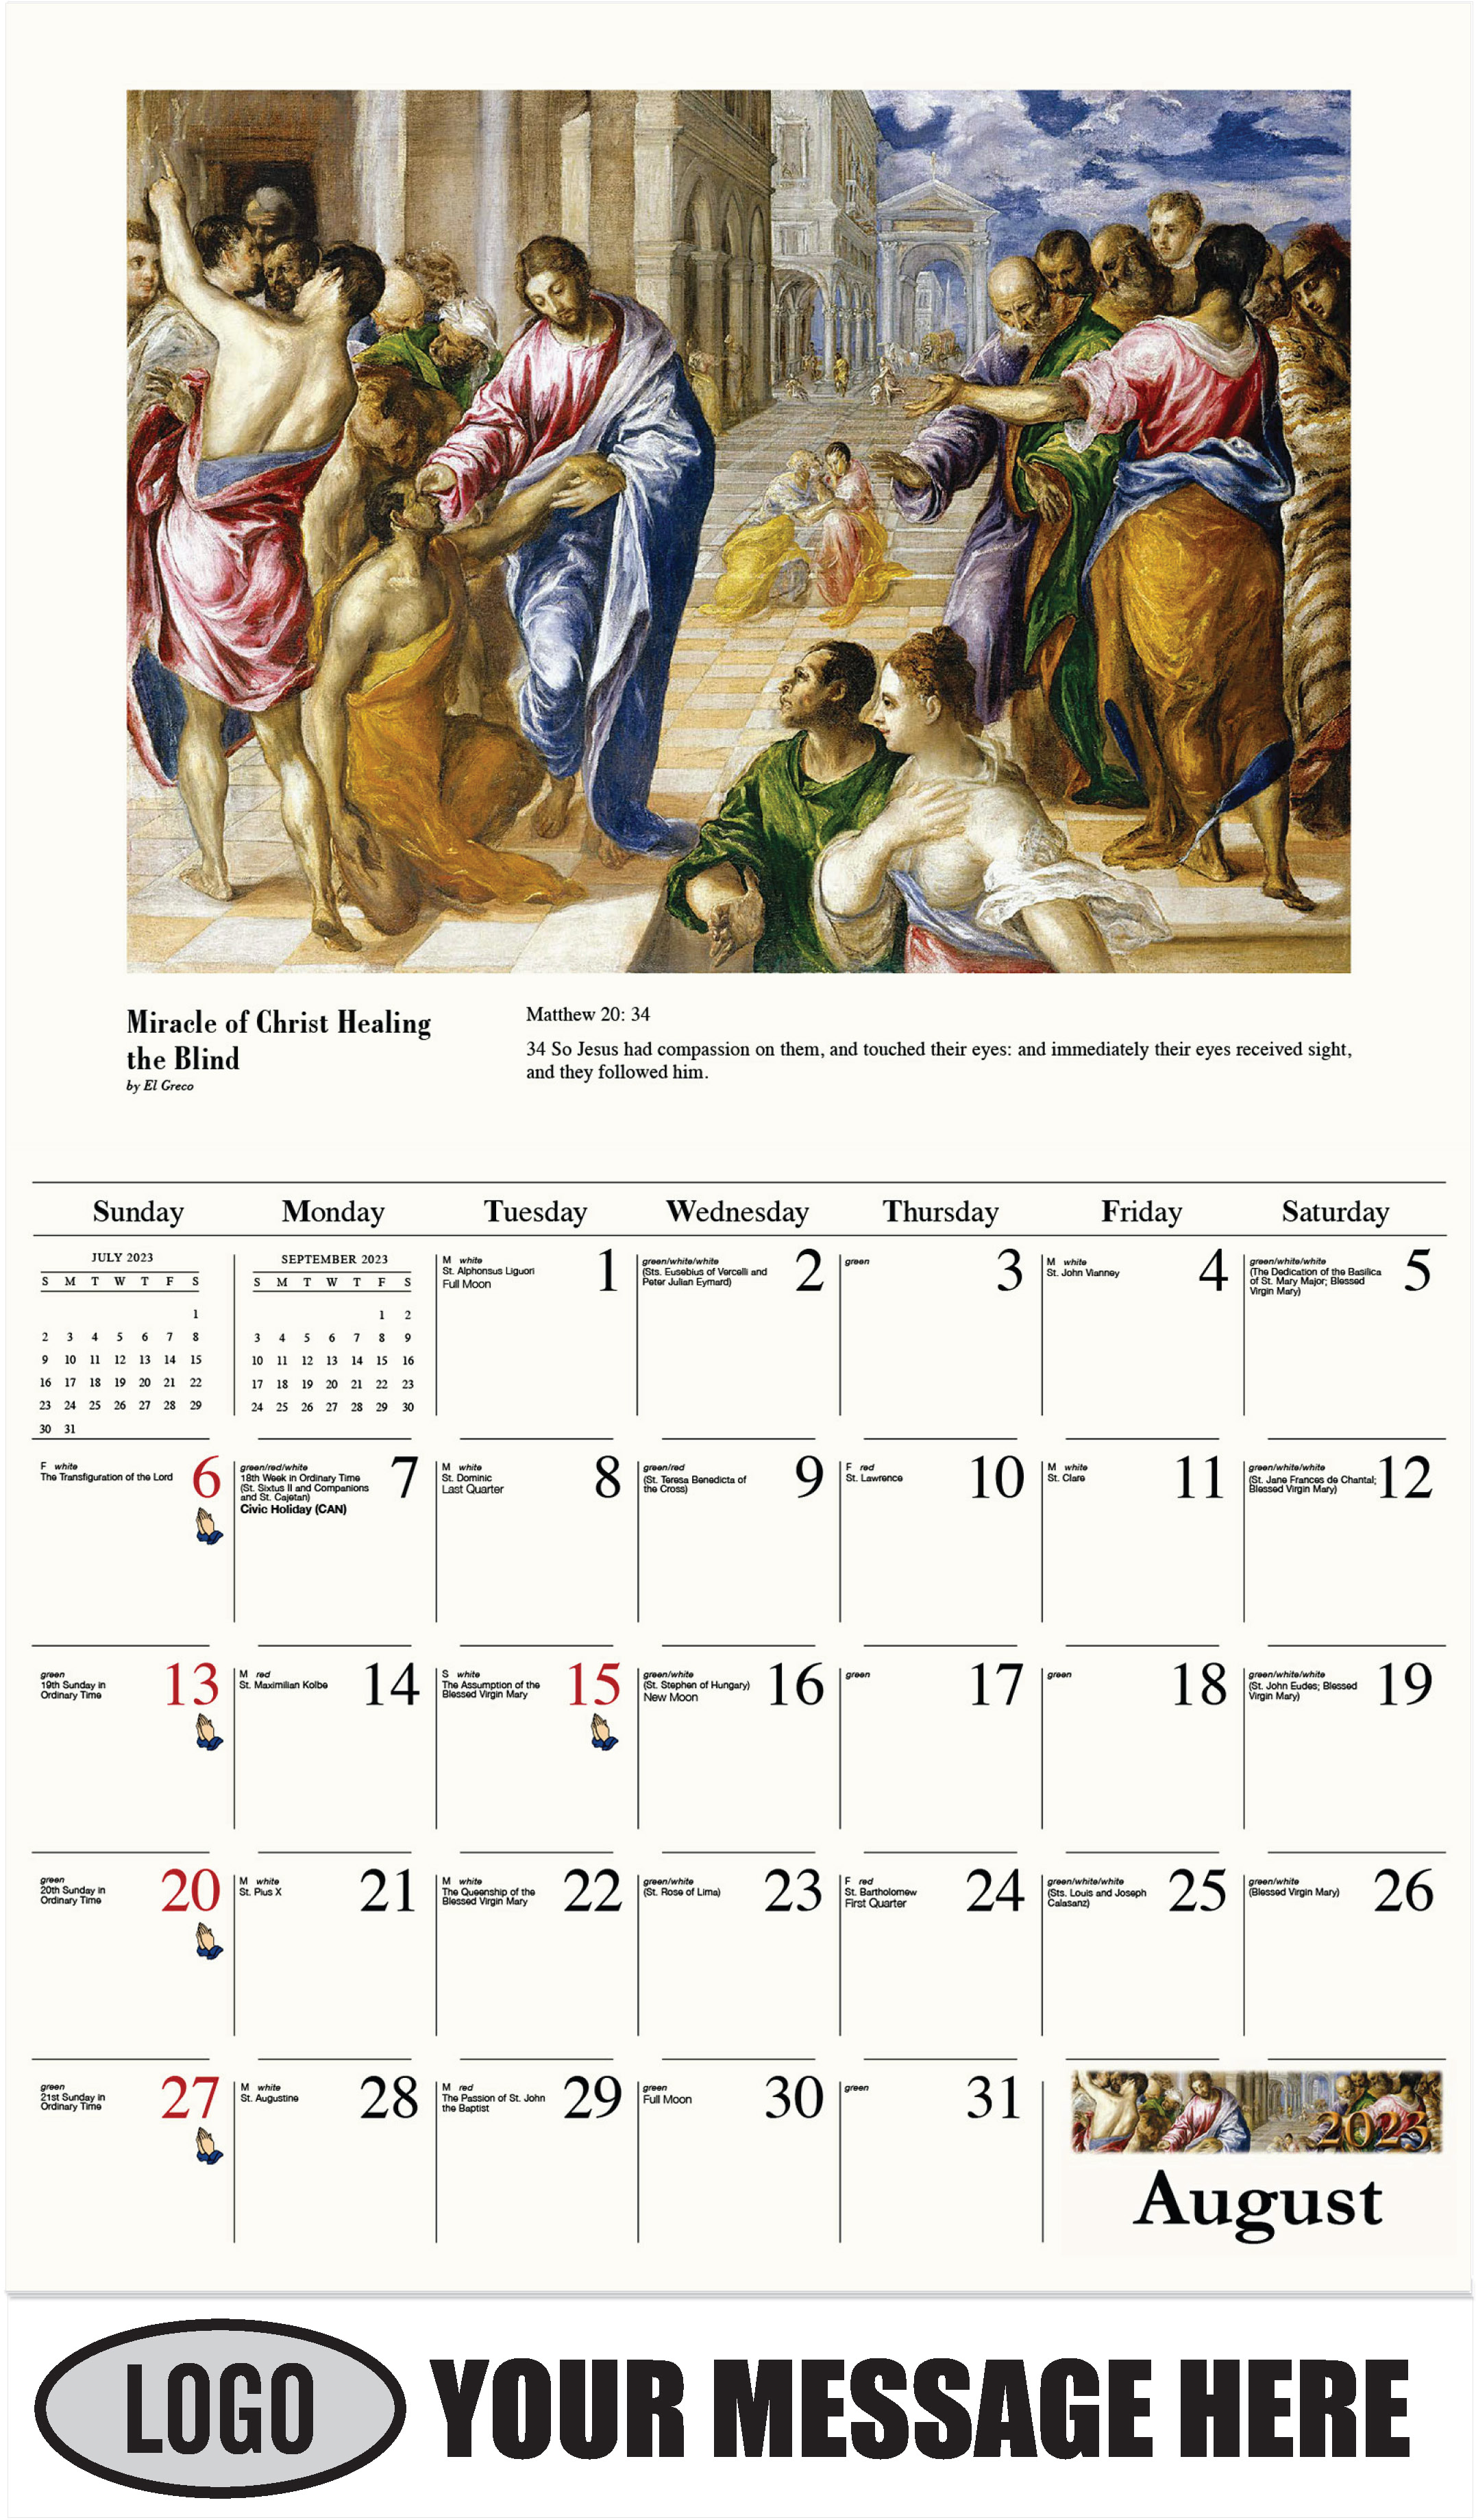 August - Catholic Inspiration 2023 Promotional Calendar